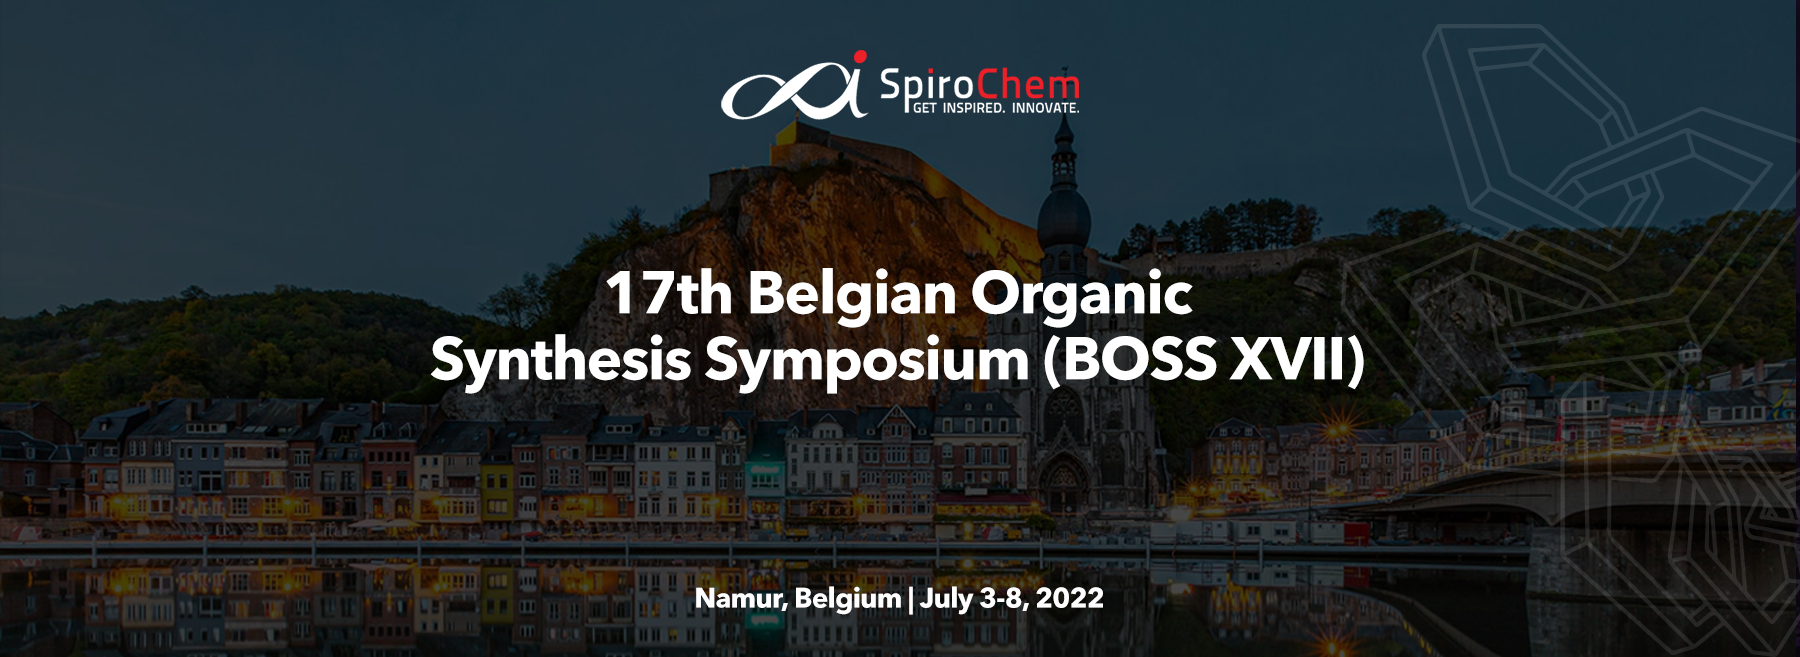 17th Belgian Organic Synthesis Symposium (BOSS XVII)